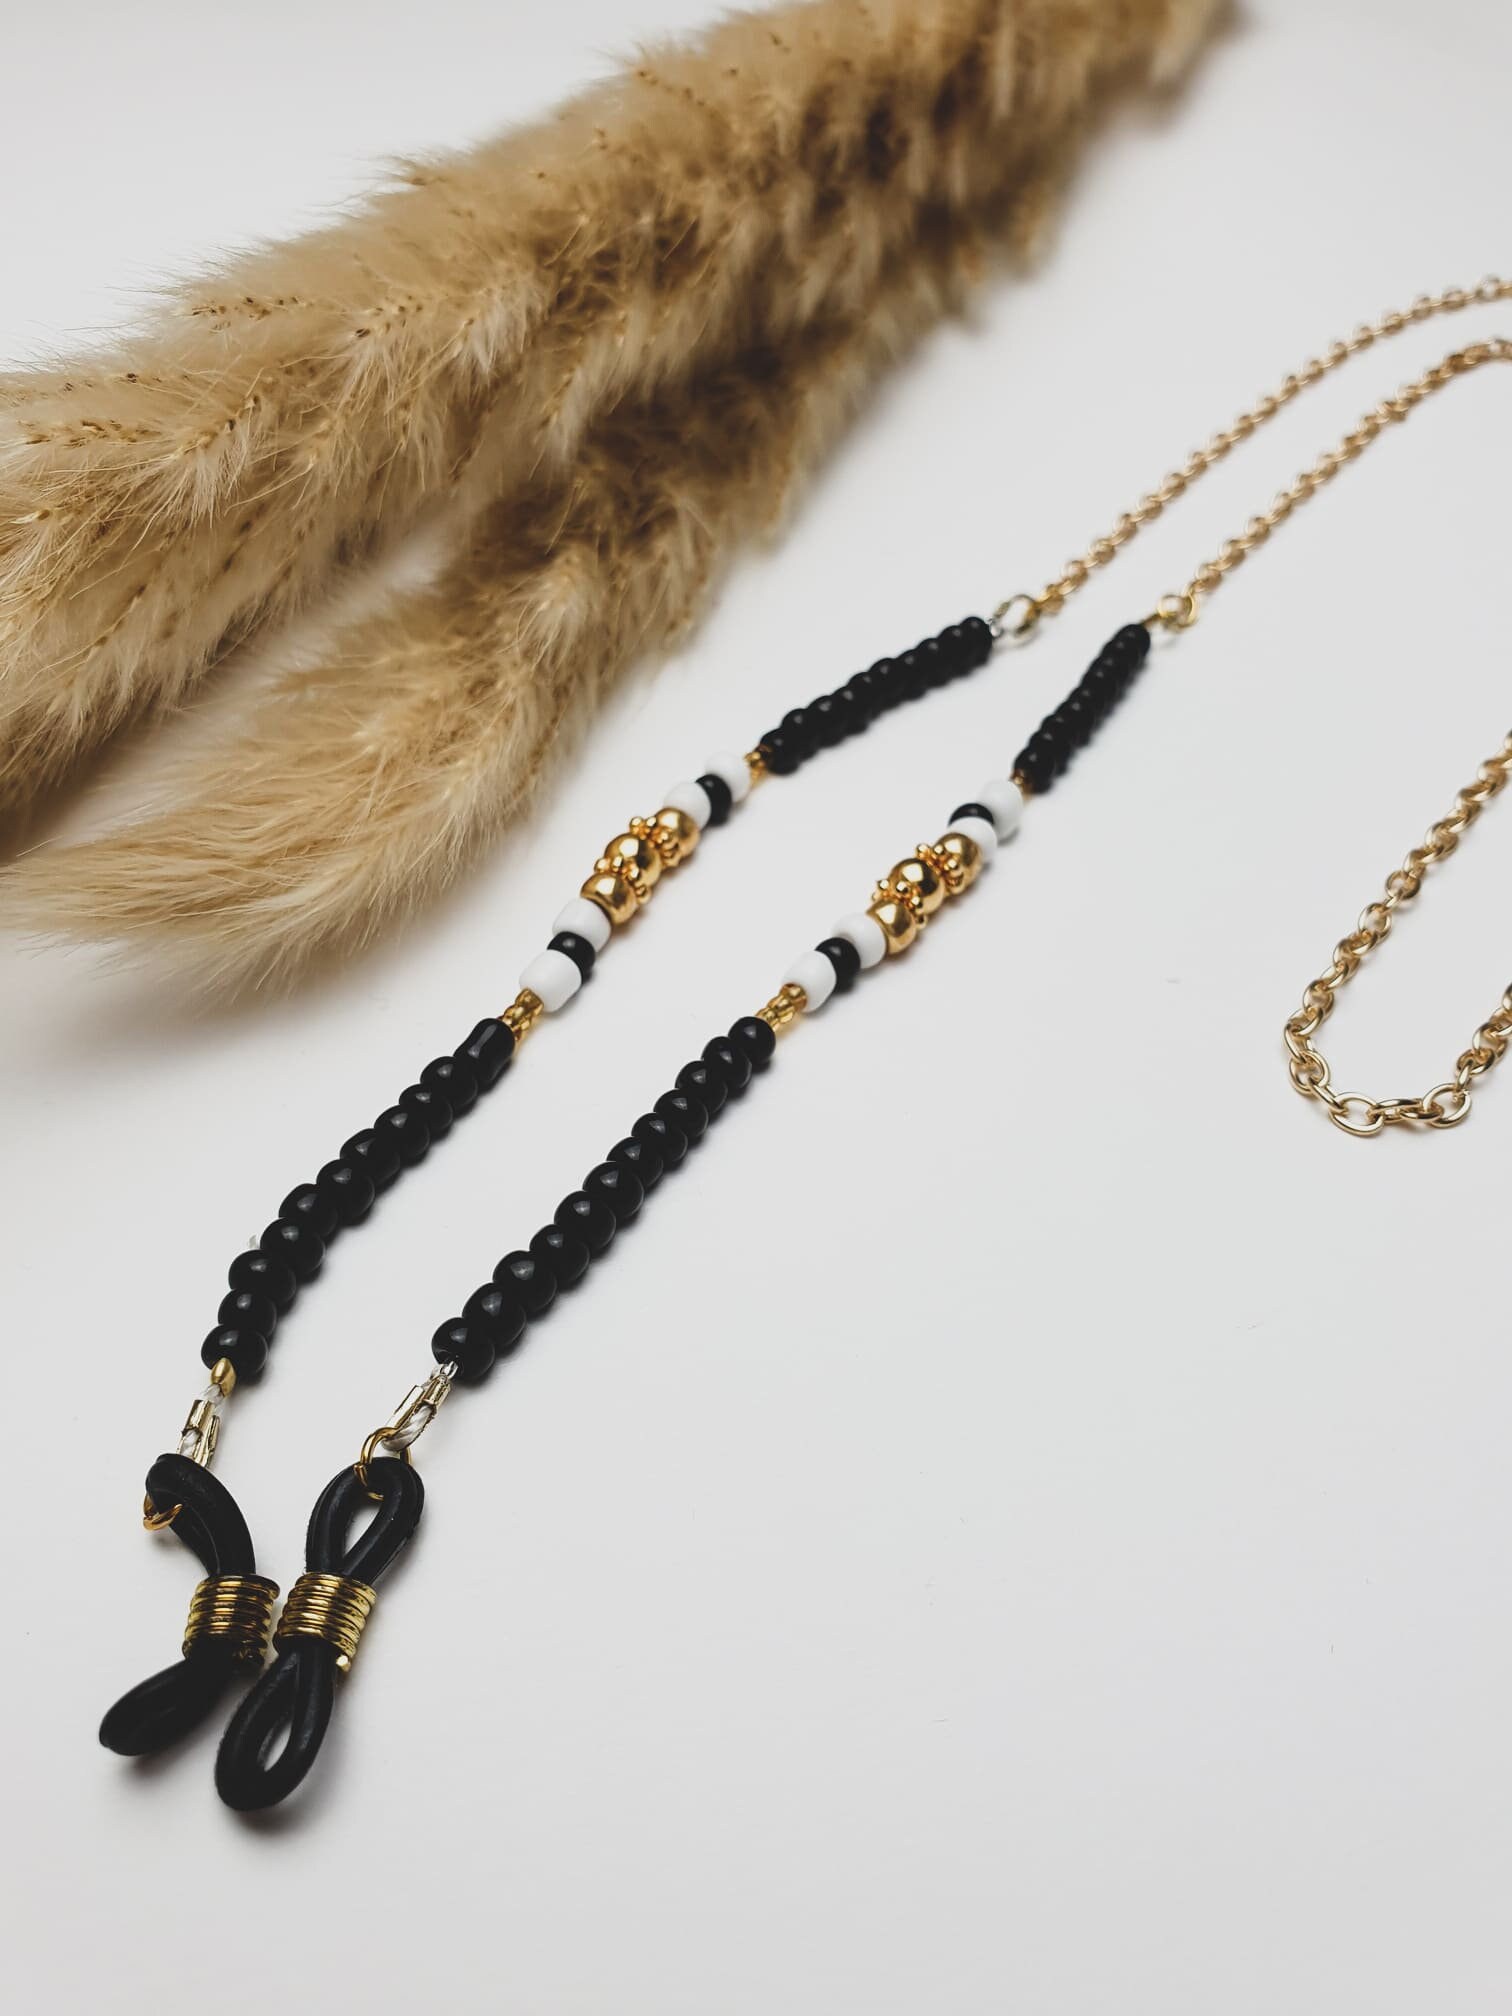 Eyewear necklace with pearls black gold handmade black | Etsy